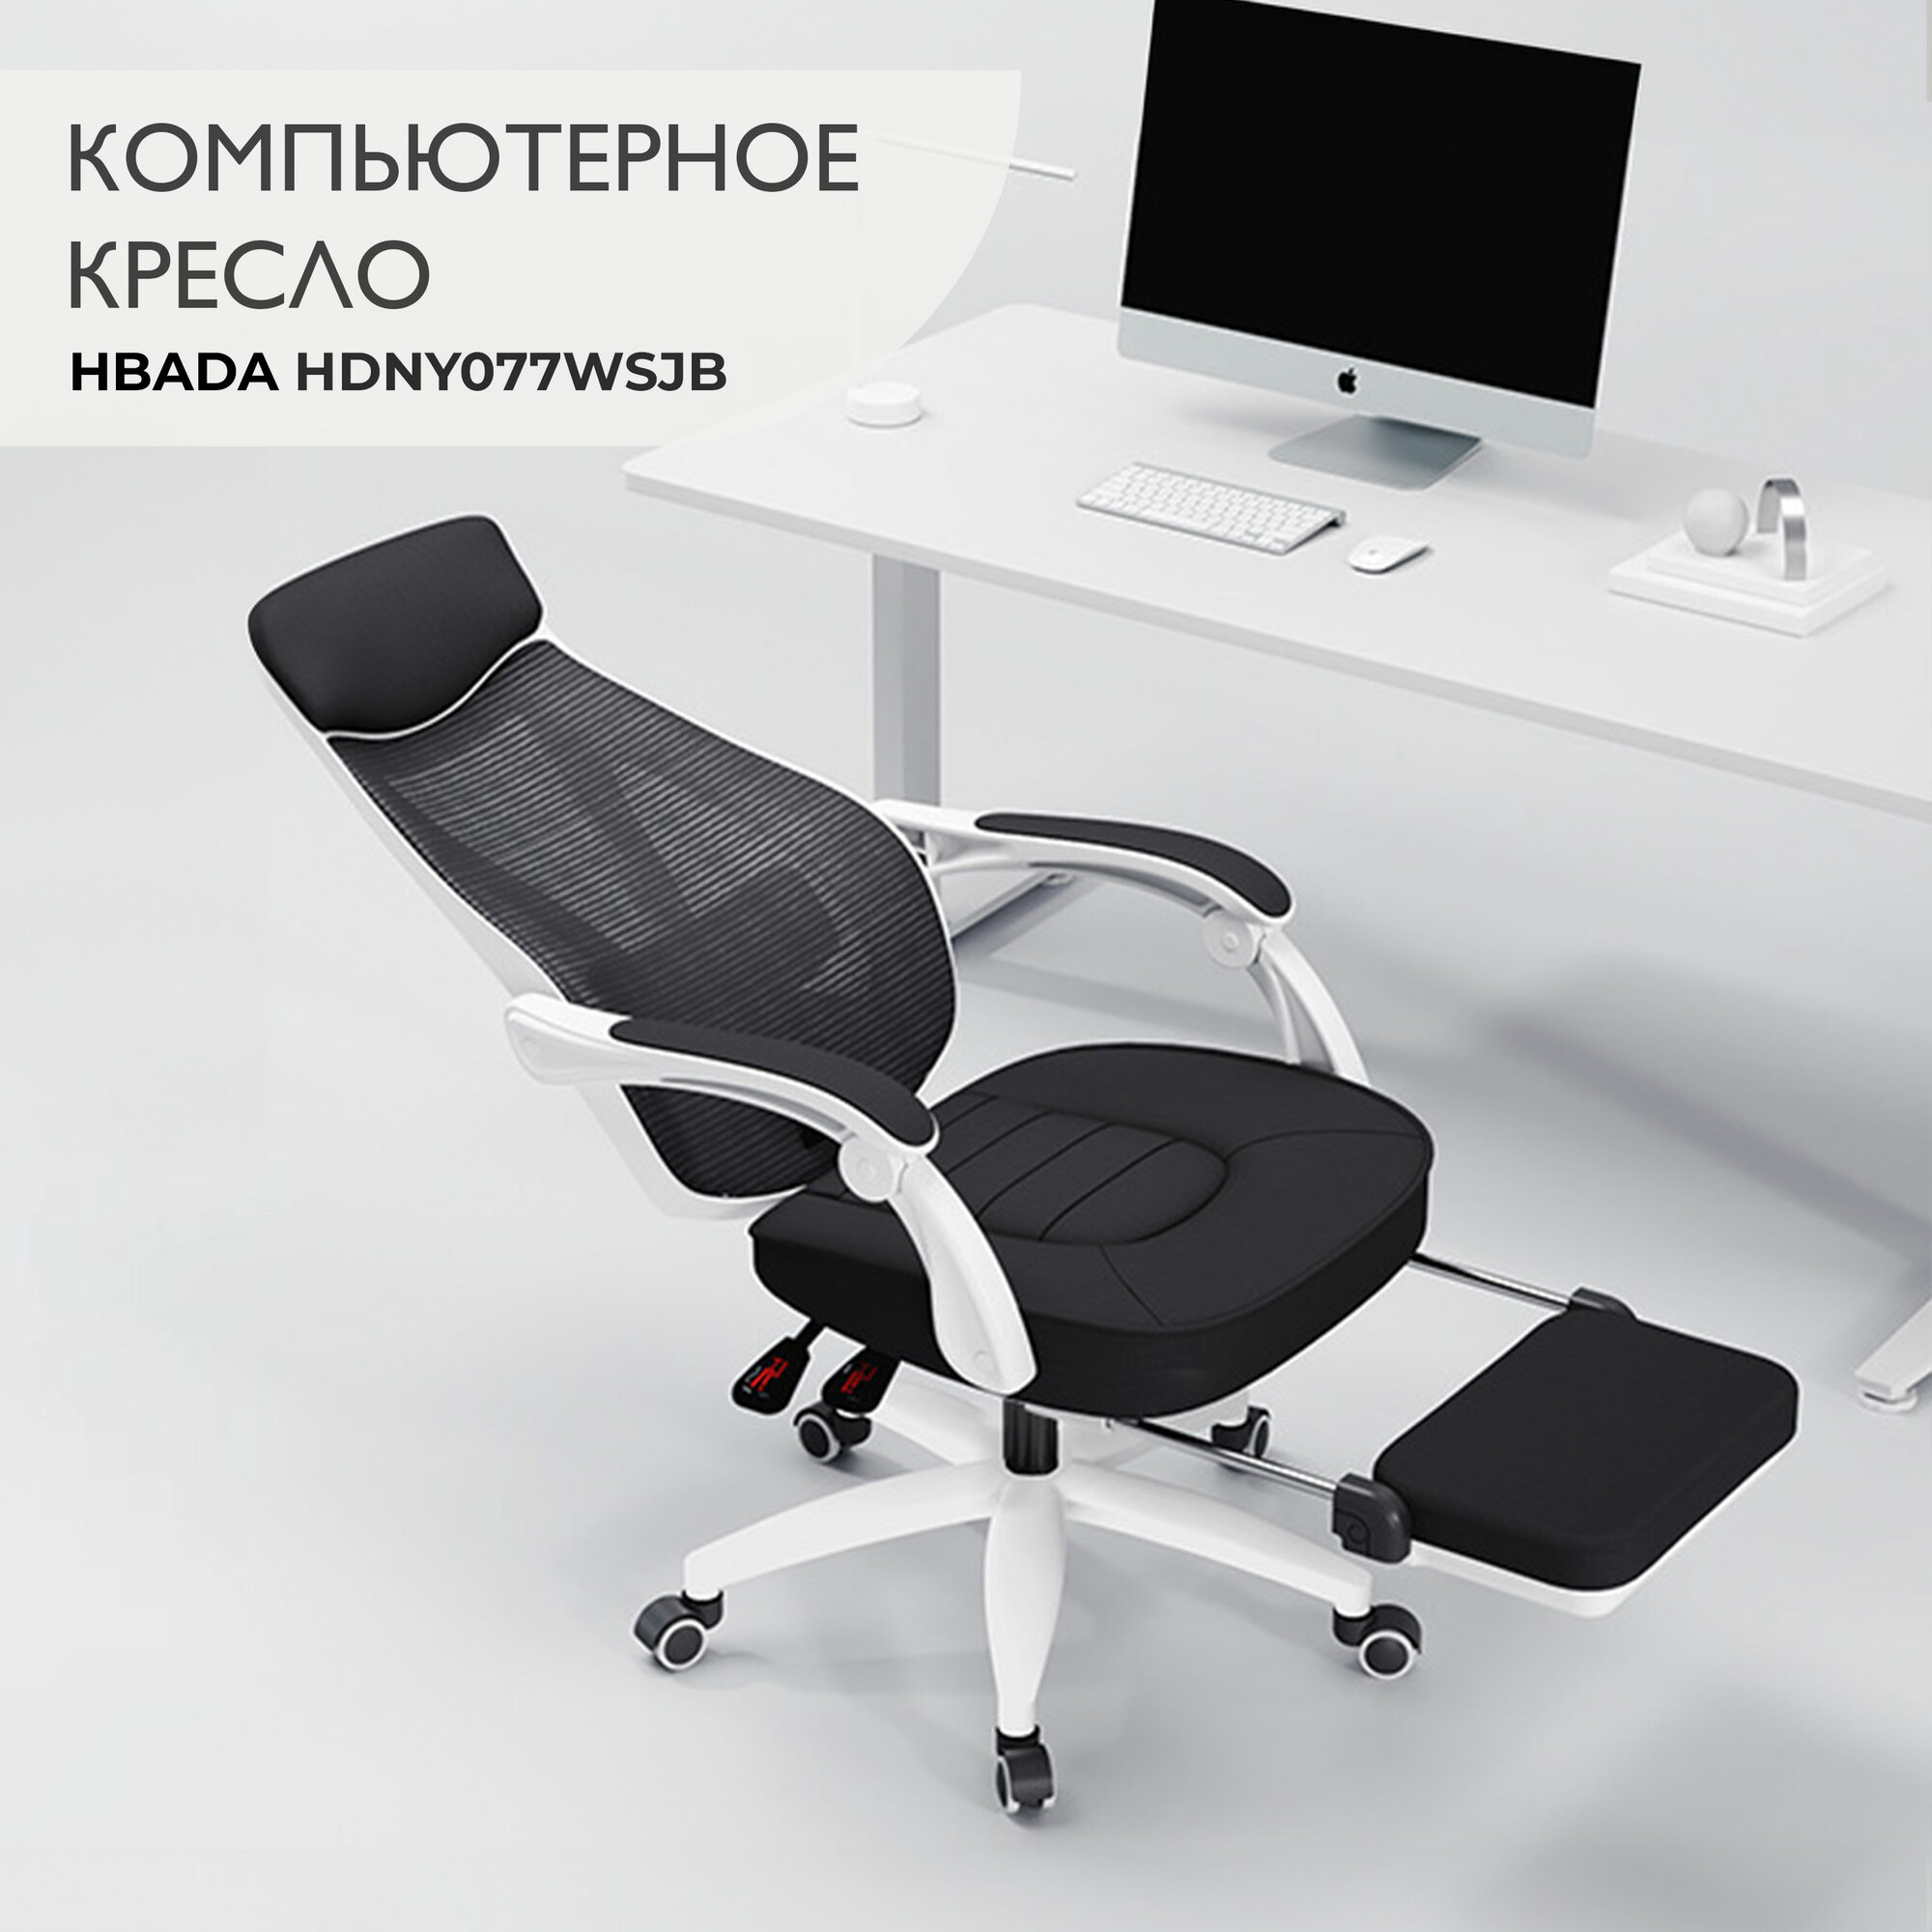 Компьютерное кресло Hbada P53 HDNY077WSJB